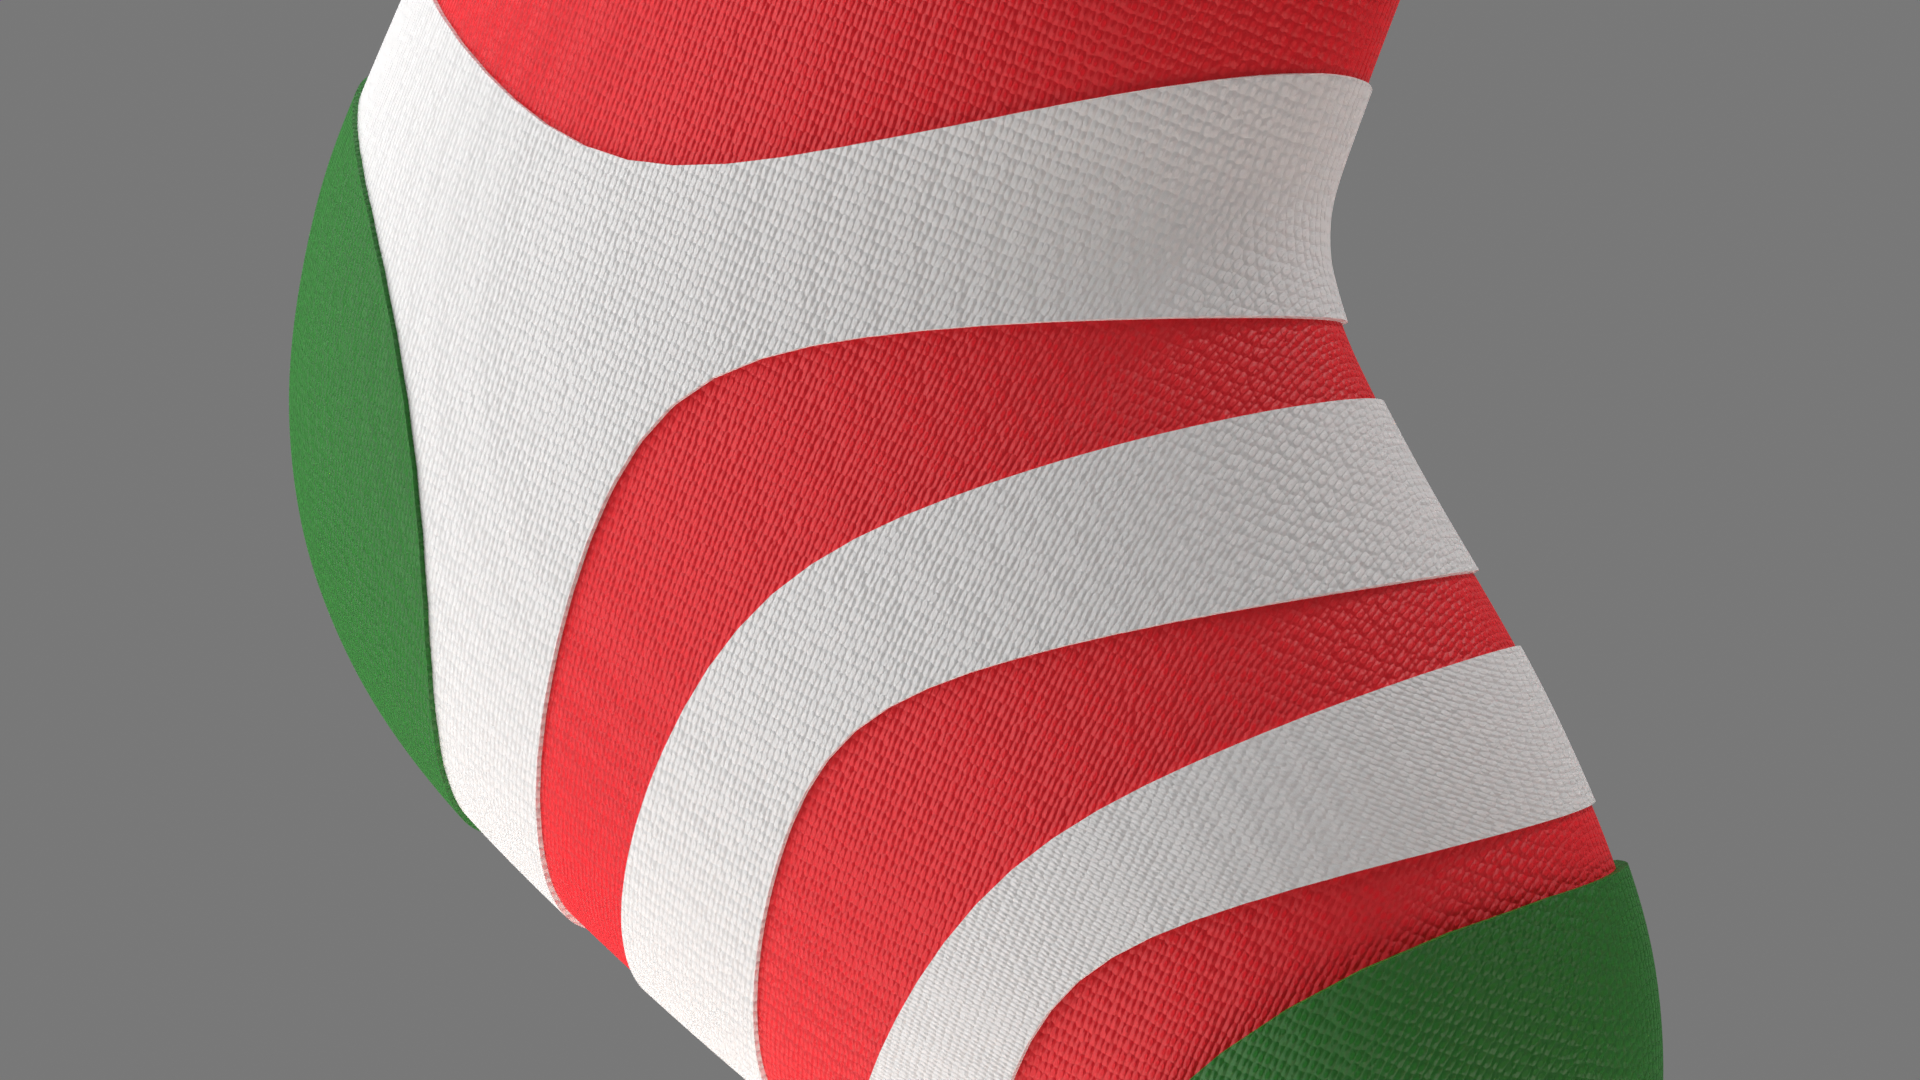 XMas Socks / Christmas Stockings preview image 3